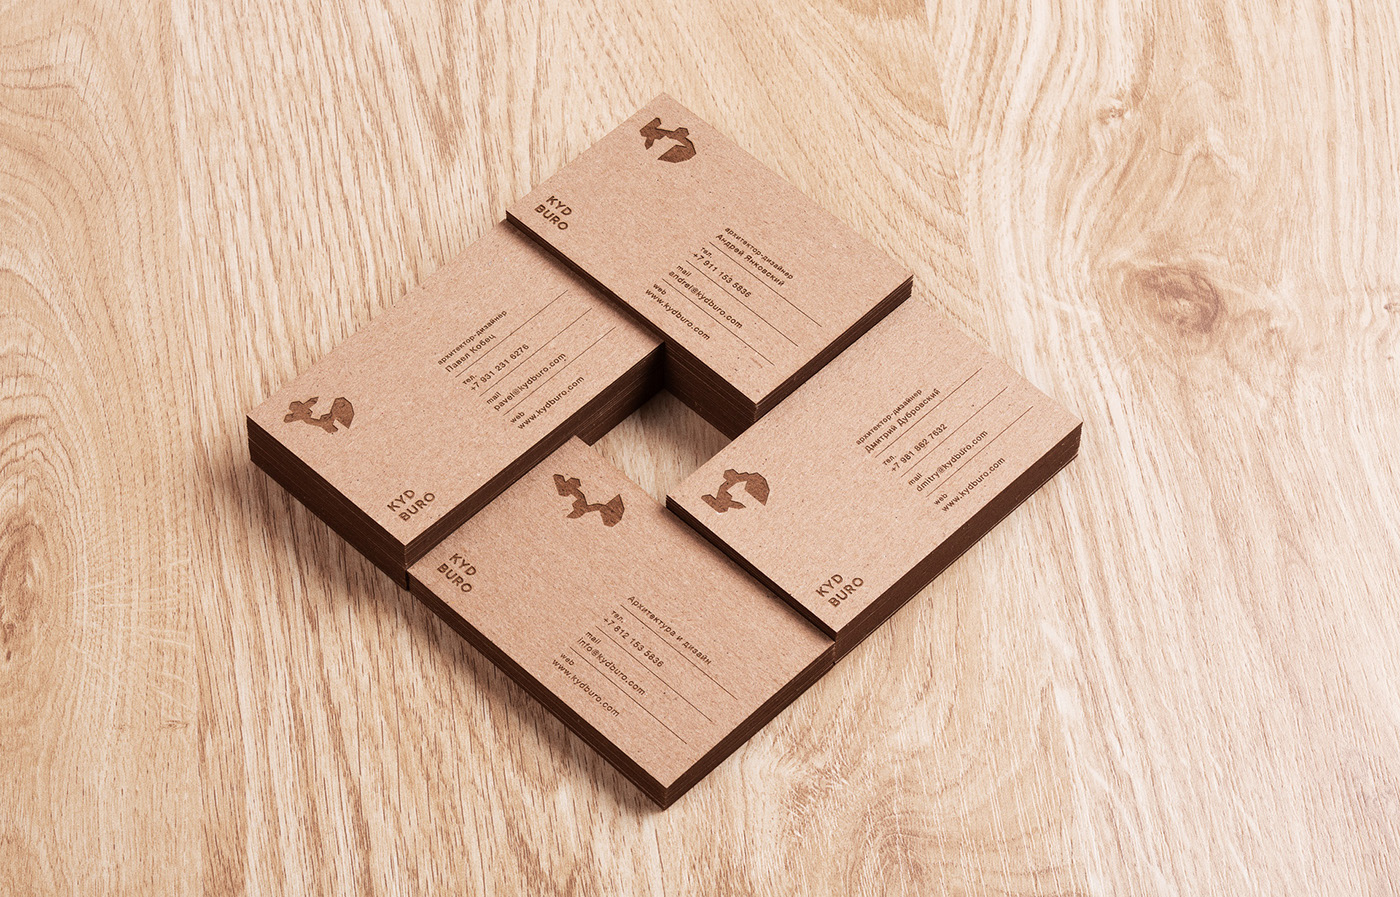 architect team laser transformer Logotype wood cardboard Beech identity isometry